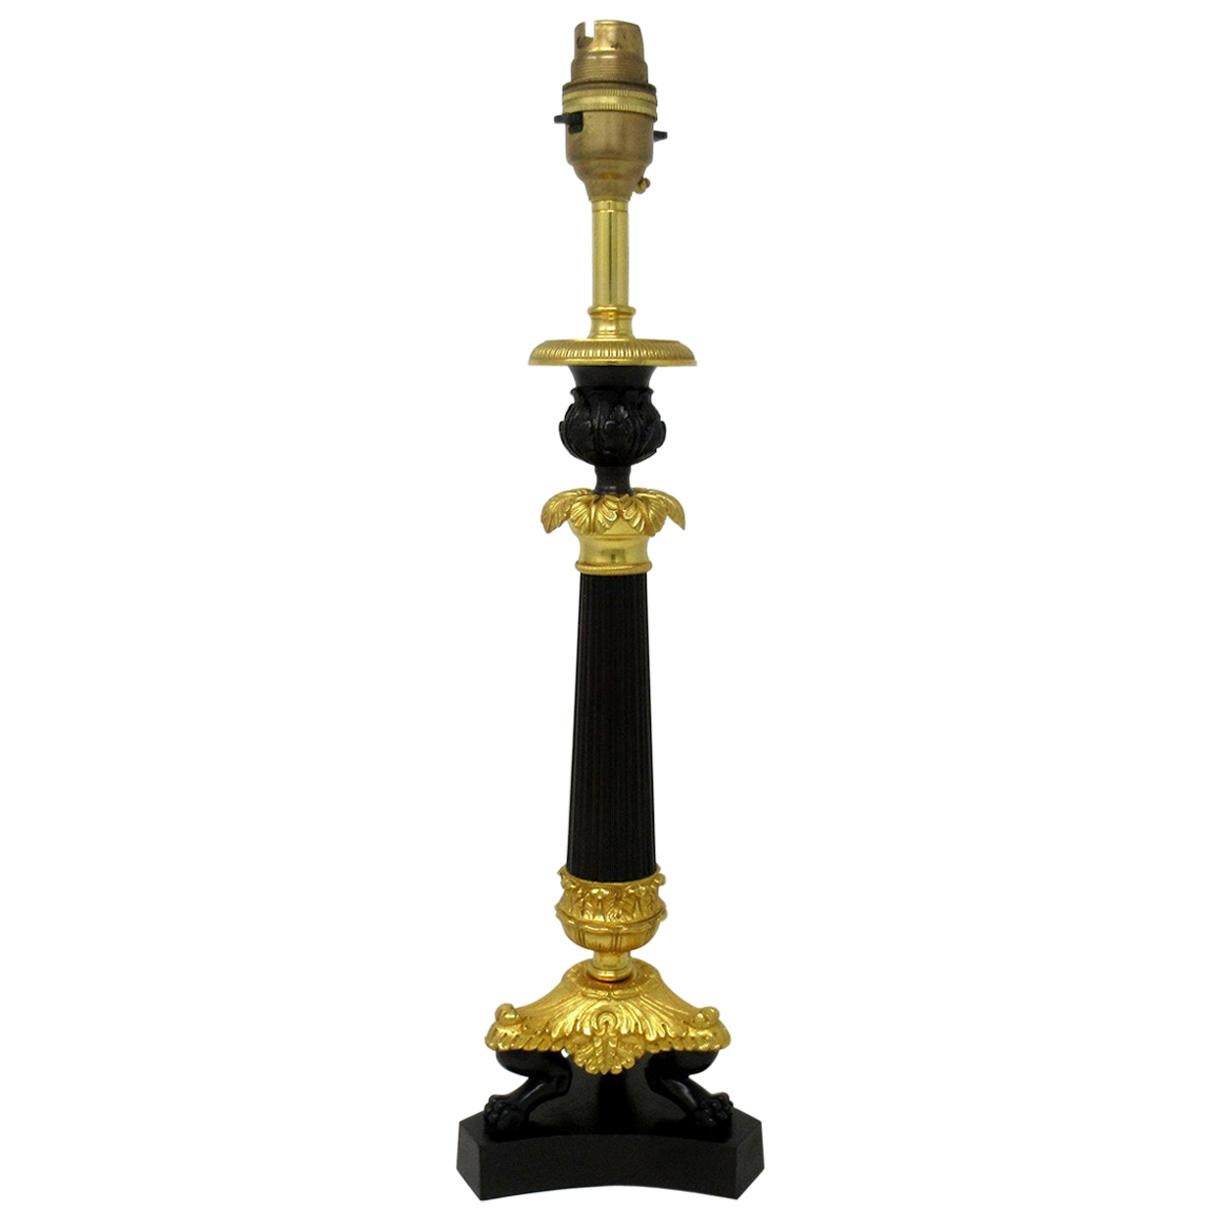 Antique French Bronze and Ormolu Corinthian Column Candlestick Lamp 19th Century